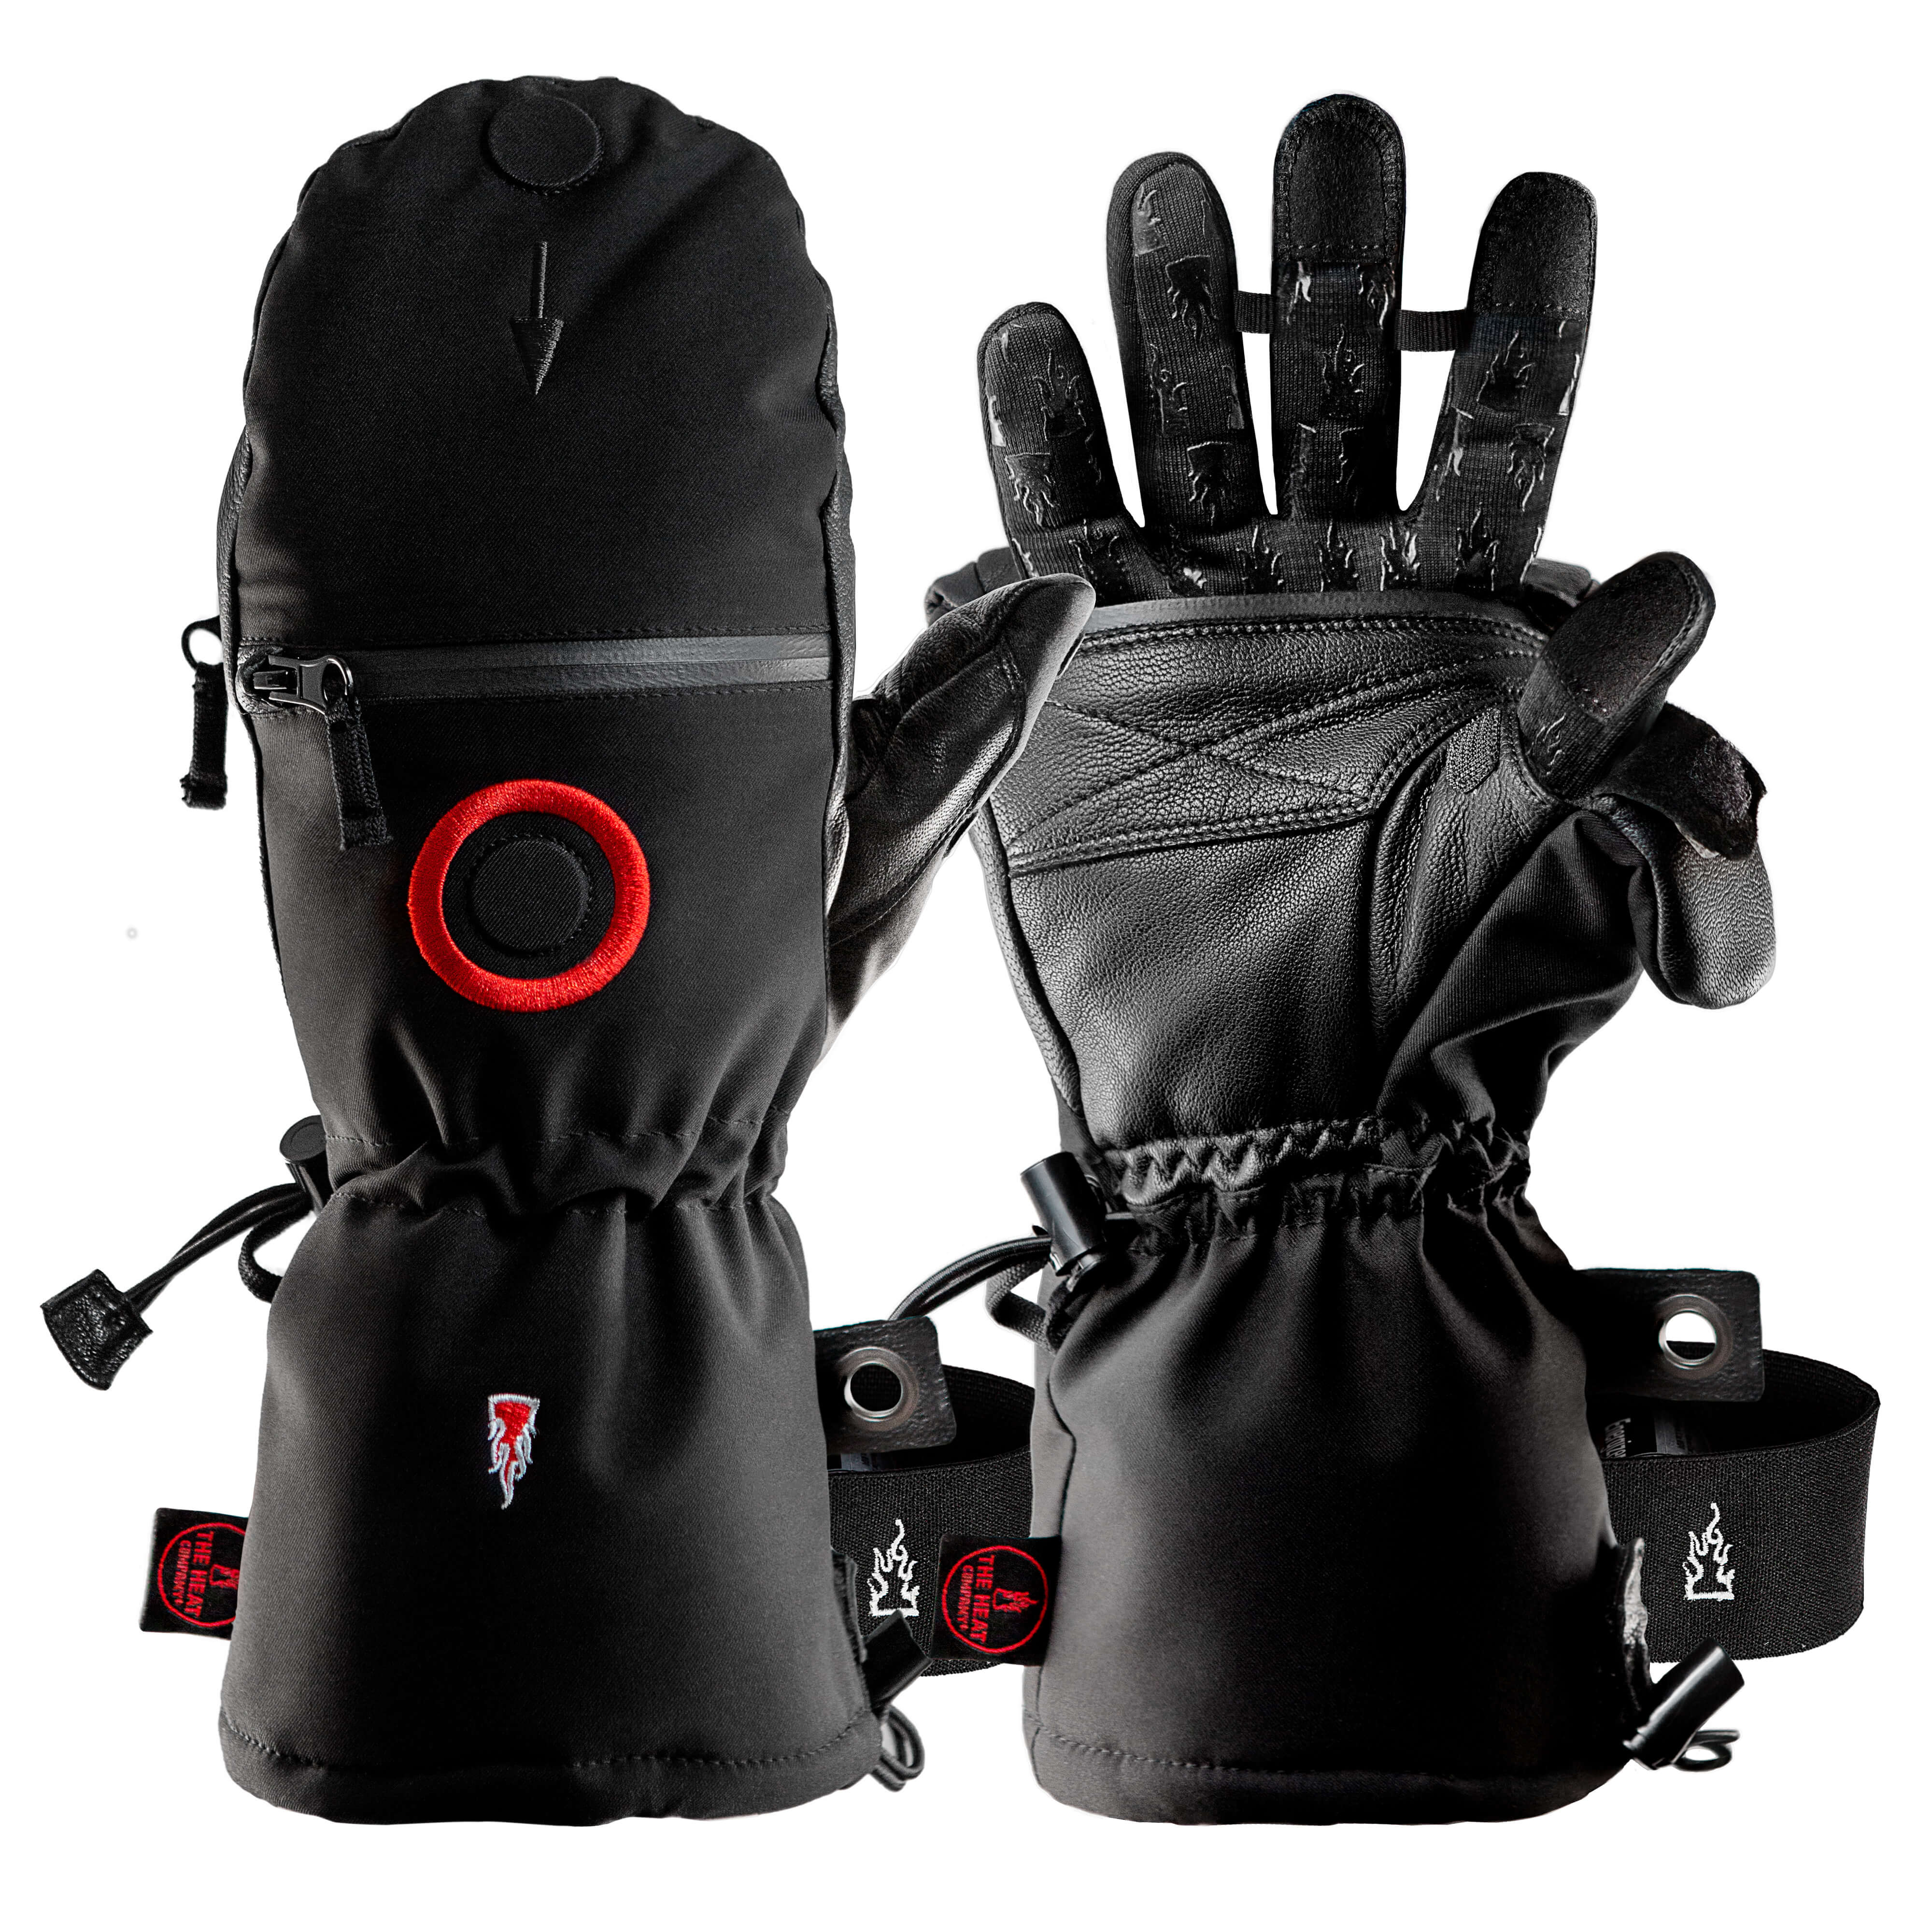 Foto guanti HEAT 3 SMART PRO con guanti e guanti muffola integrati di THE HEAT COMPANY